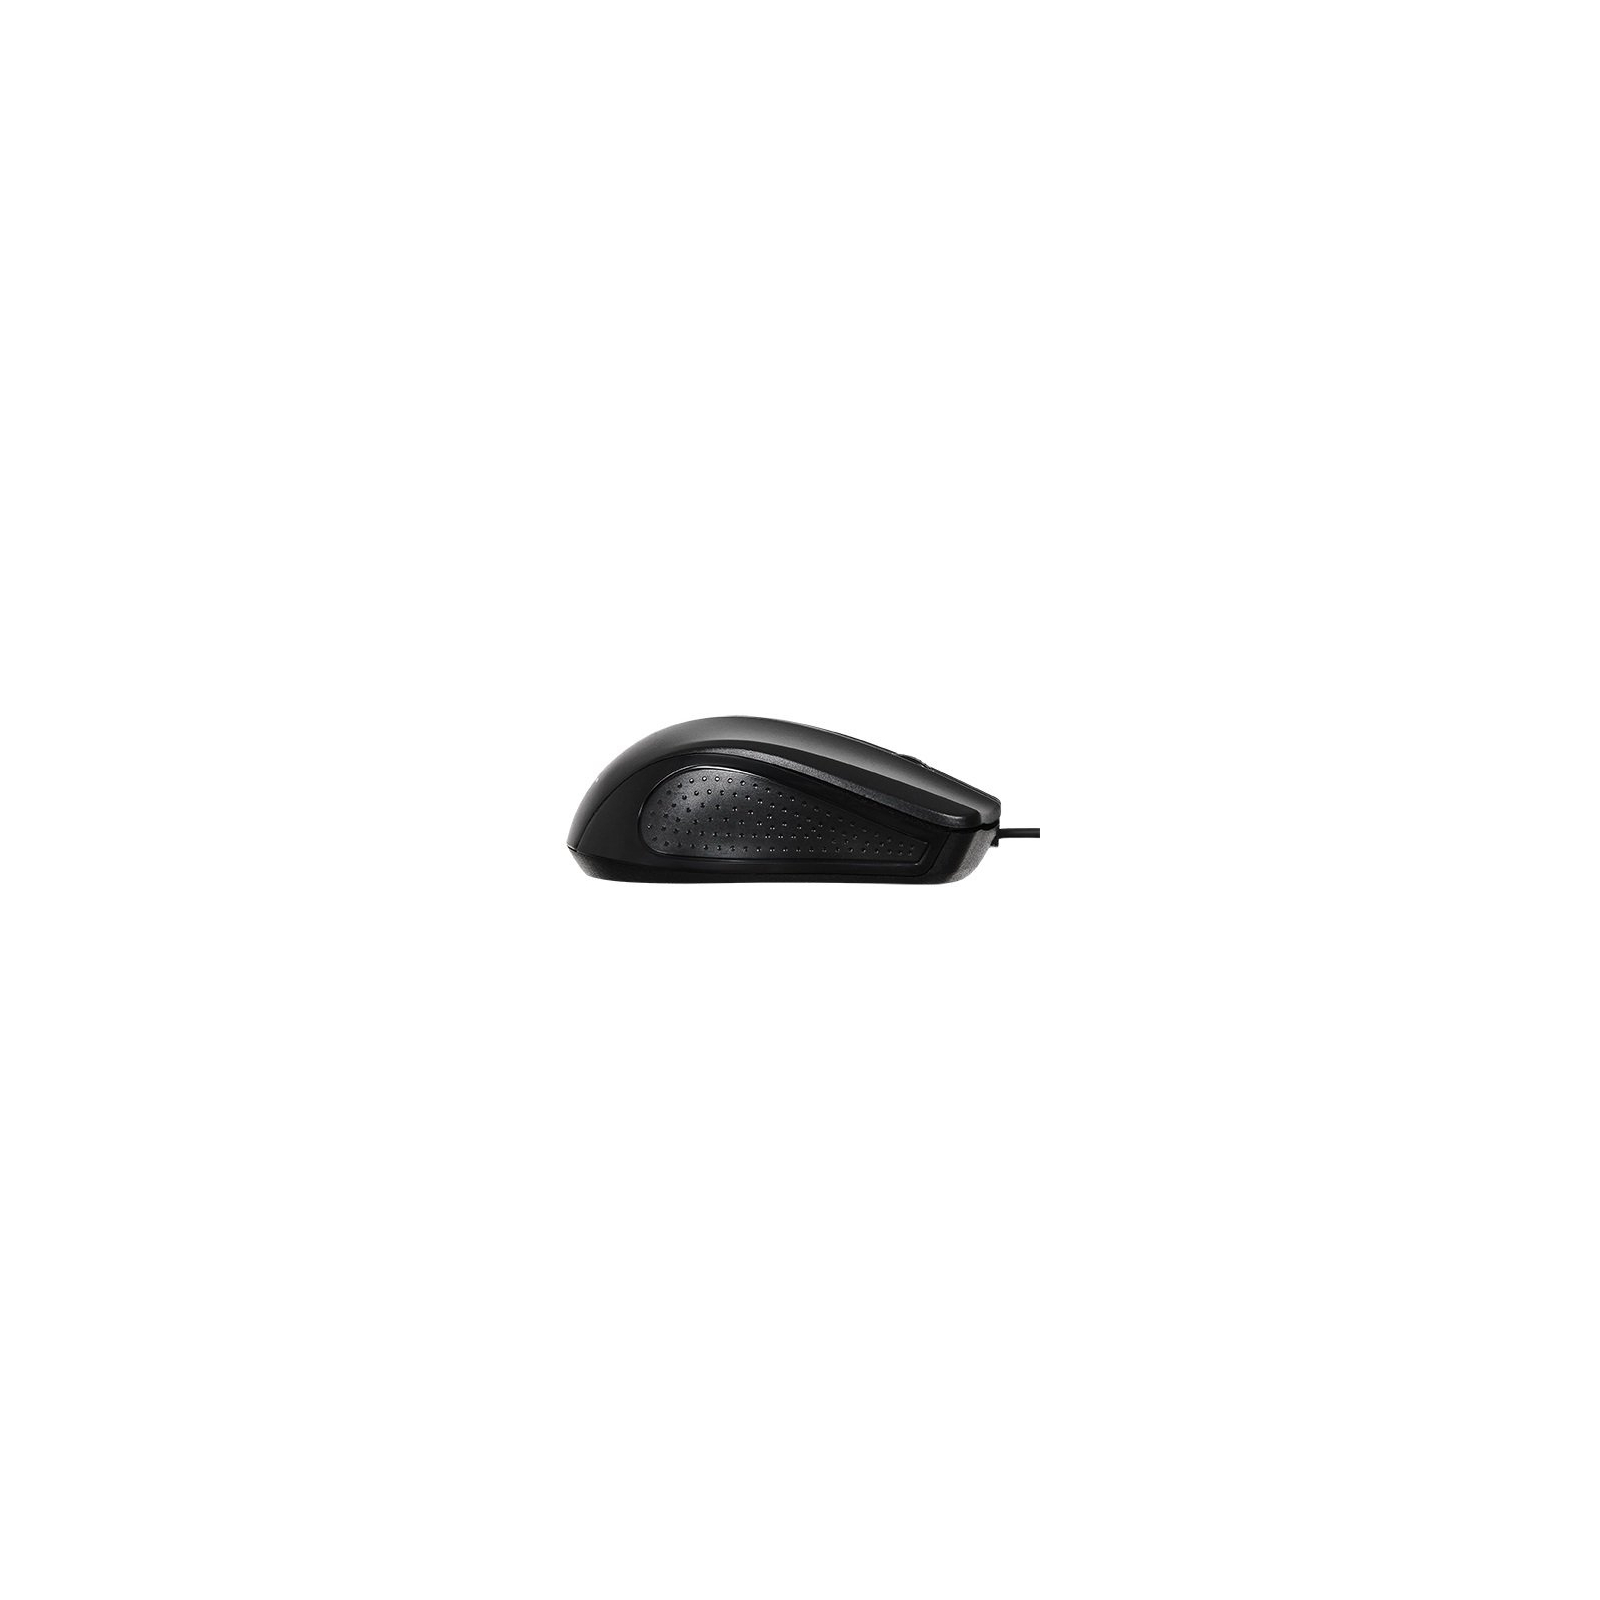 Мышка Acer OMW010 USB Black (ZL.MCEEE.026) изображение 5